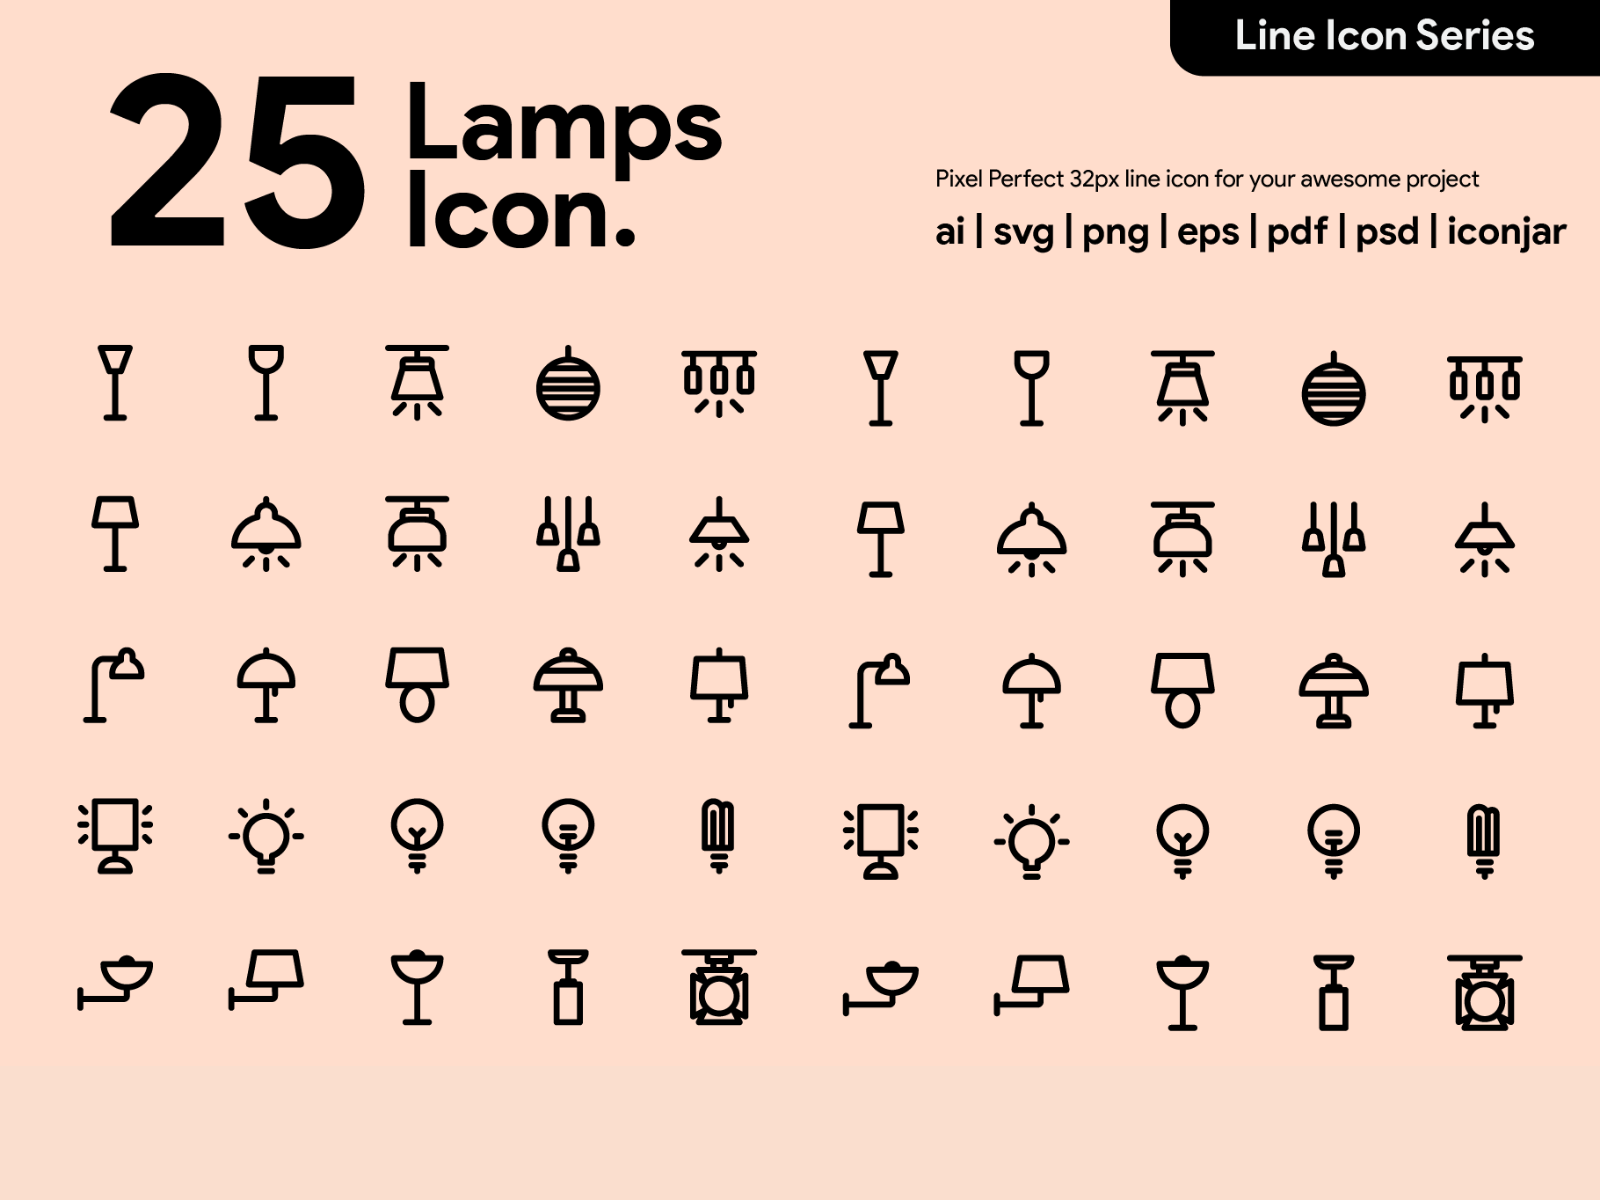 App icons design idea #320: Kawaicon - 25 Lamps Line Icon